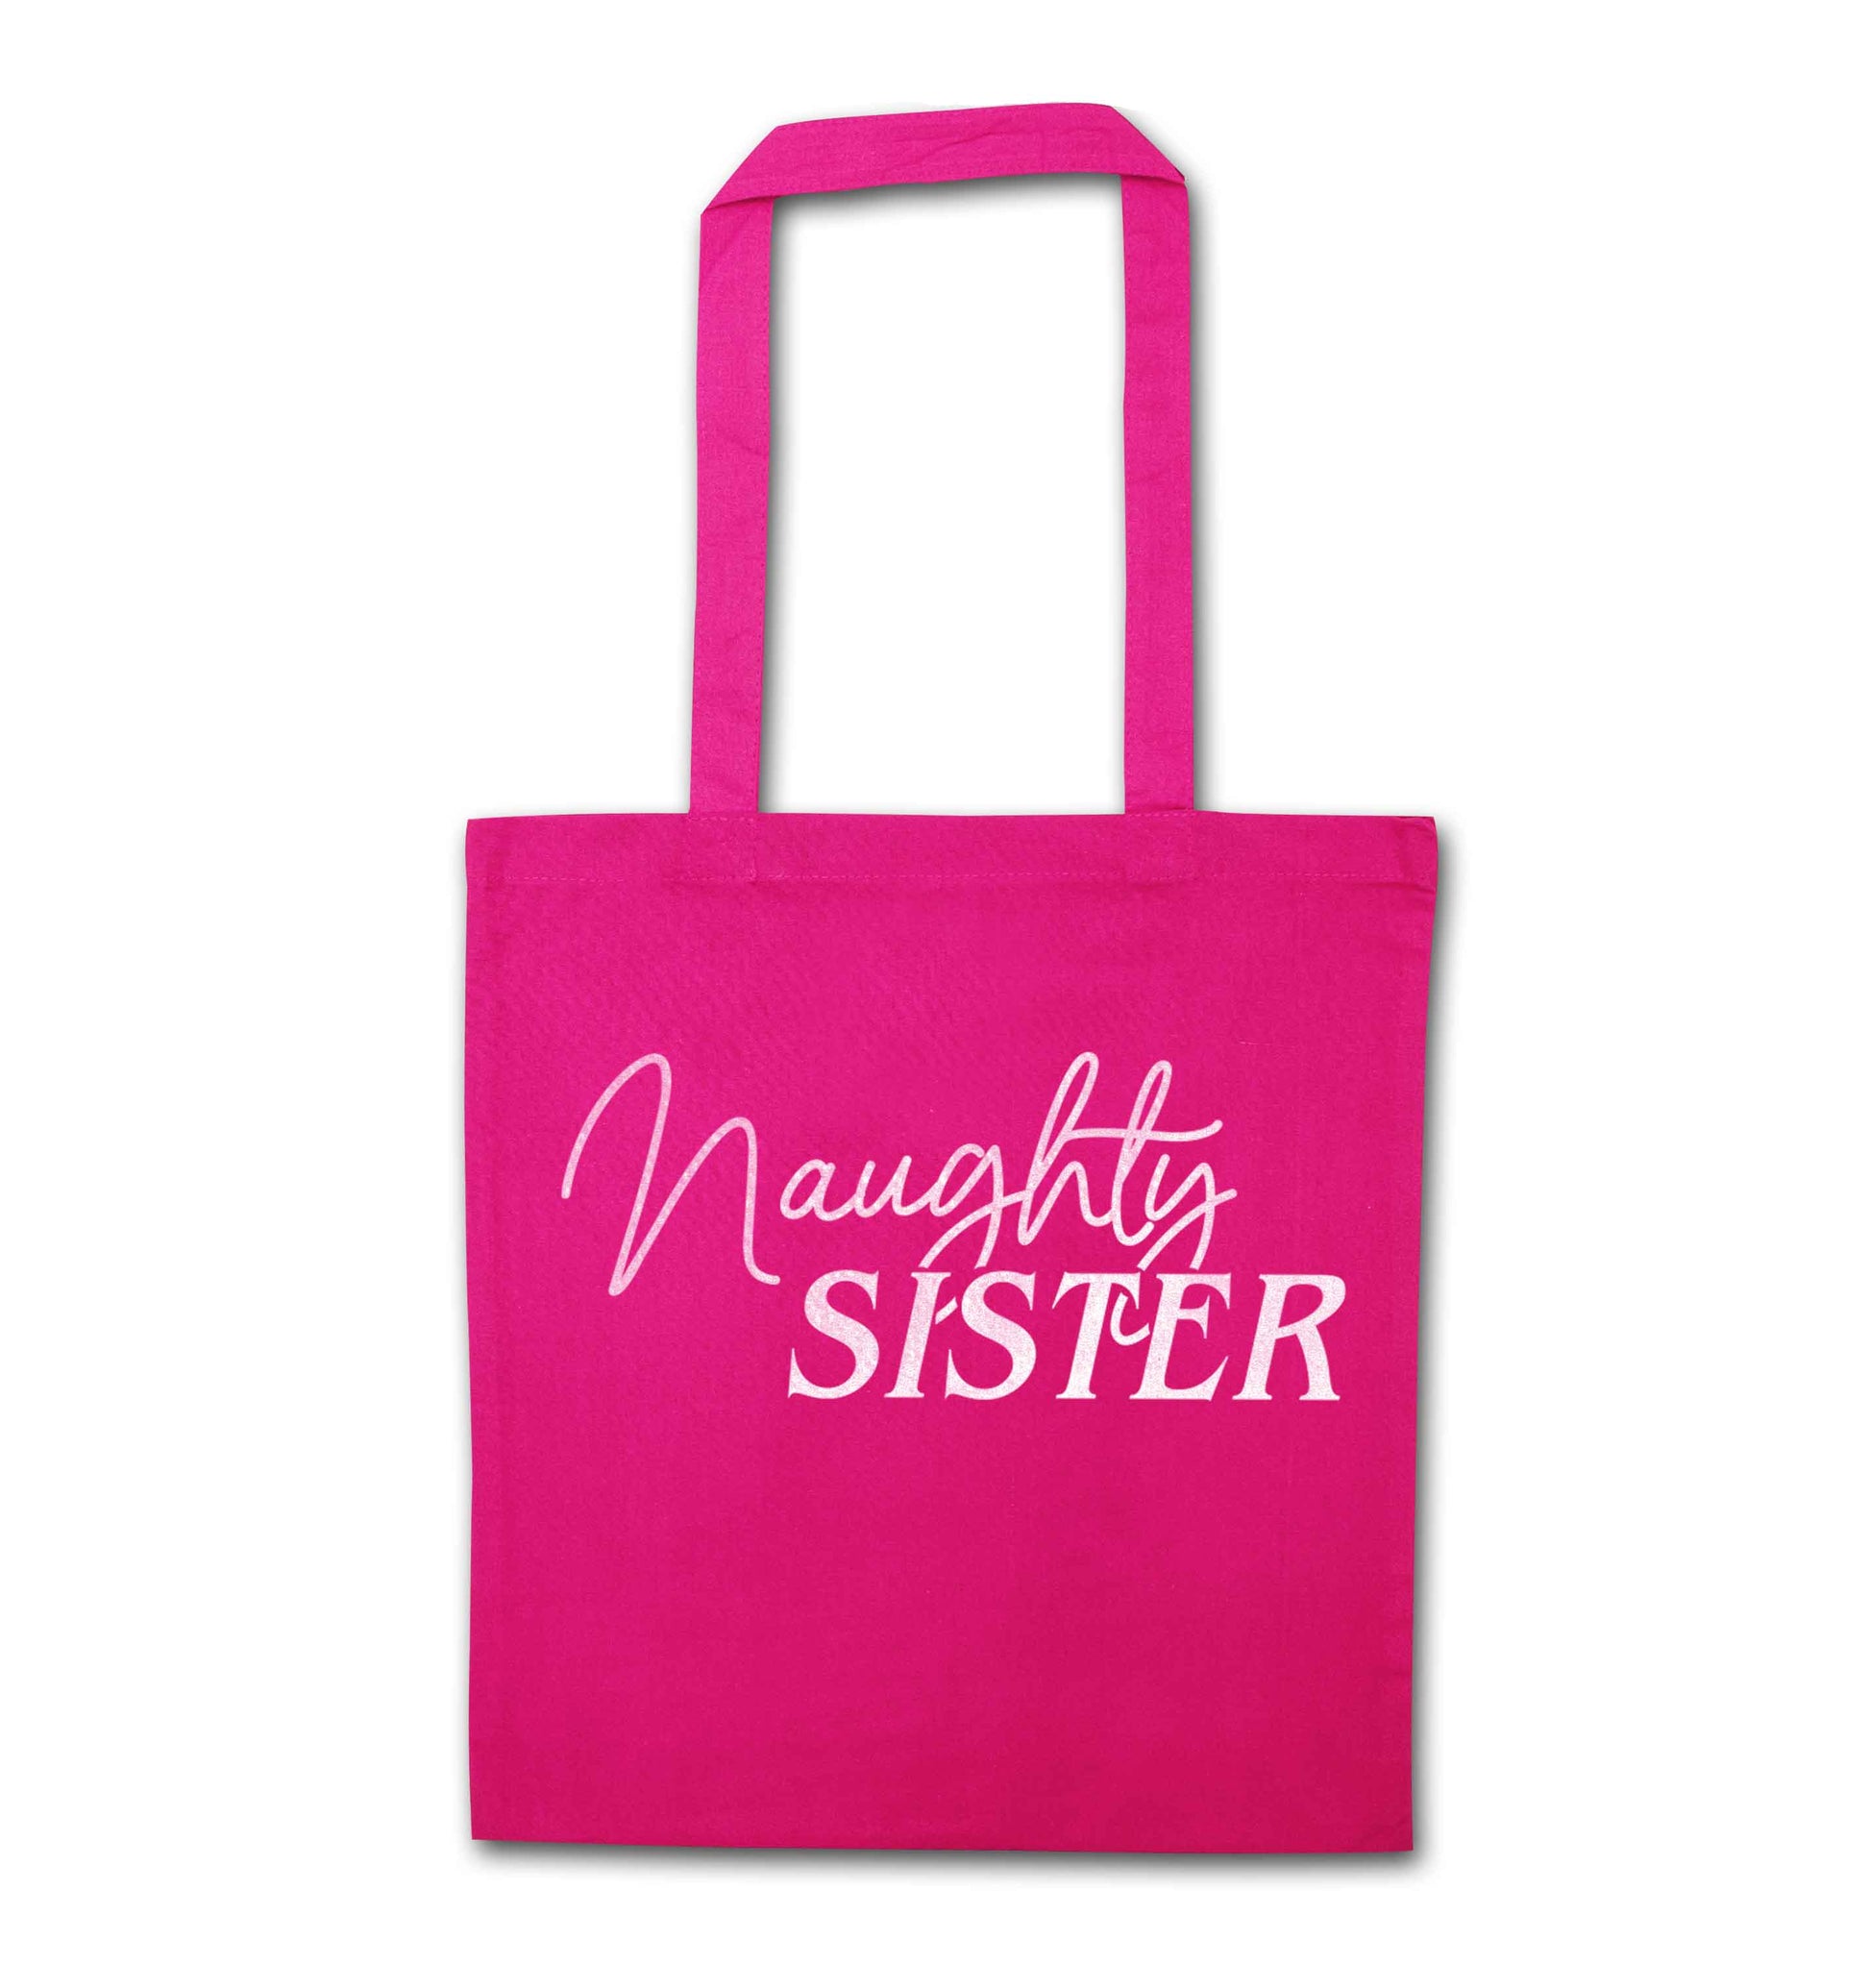 Naughty Sister pink tote bag